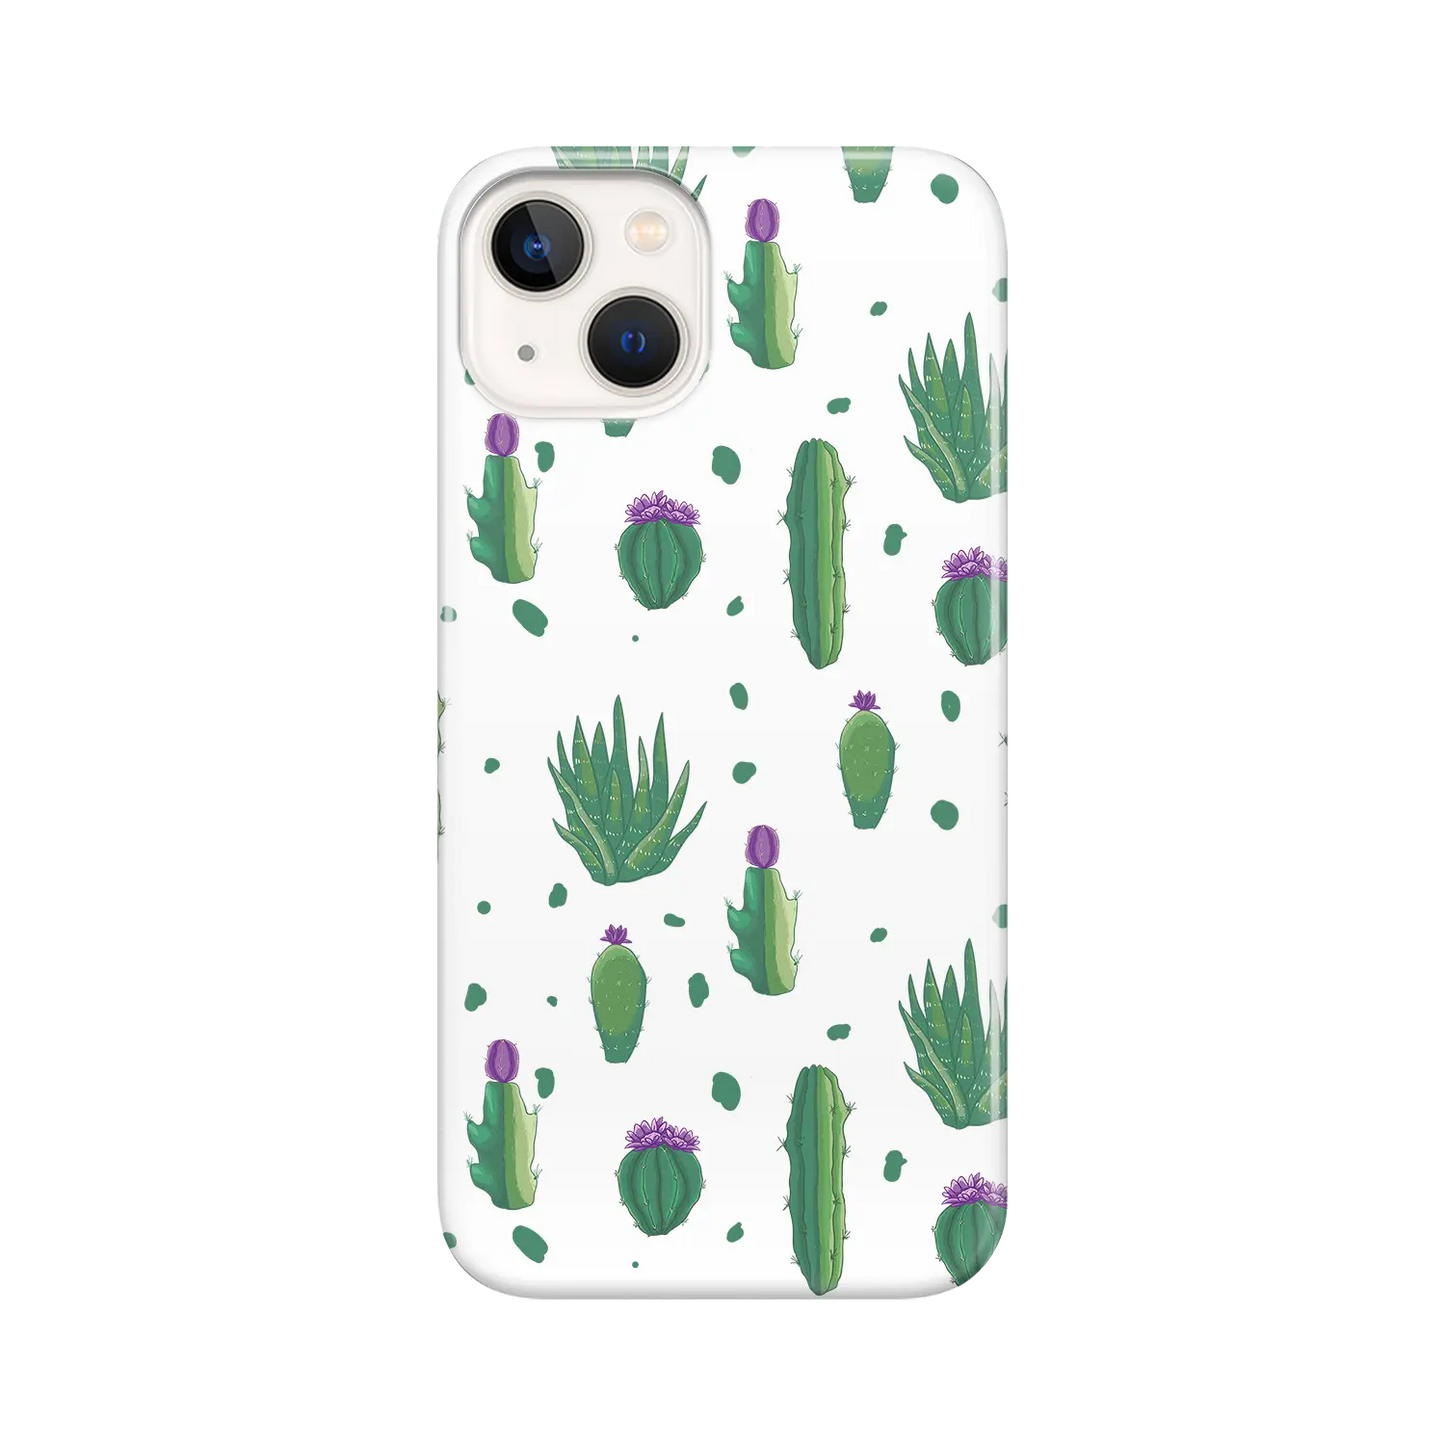 Flor de cactus - Carcasa personalizada iPhone